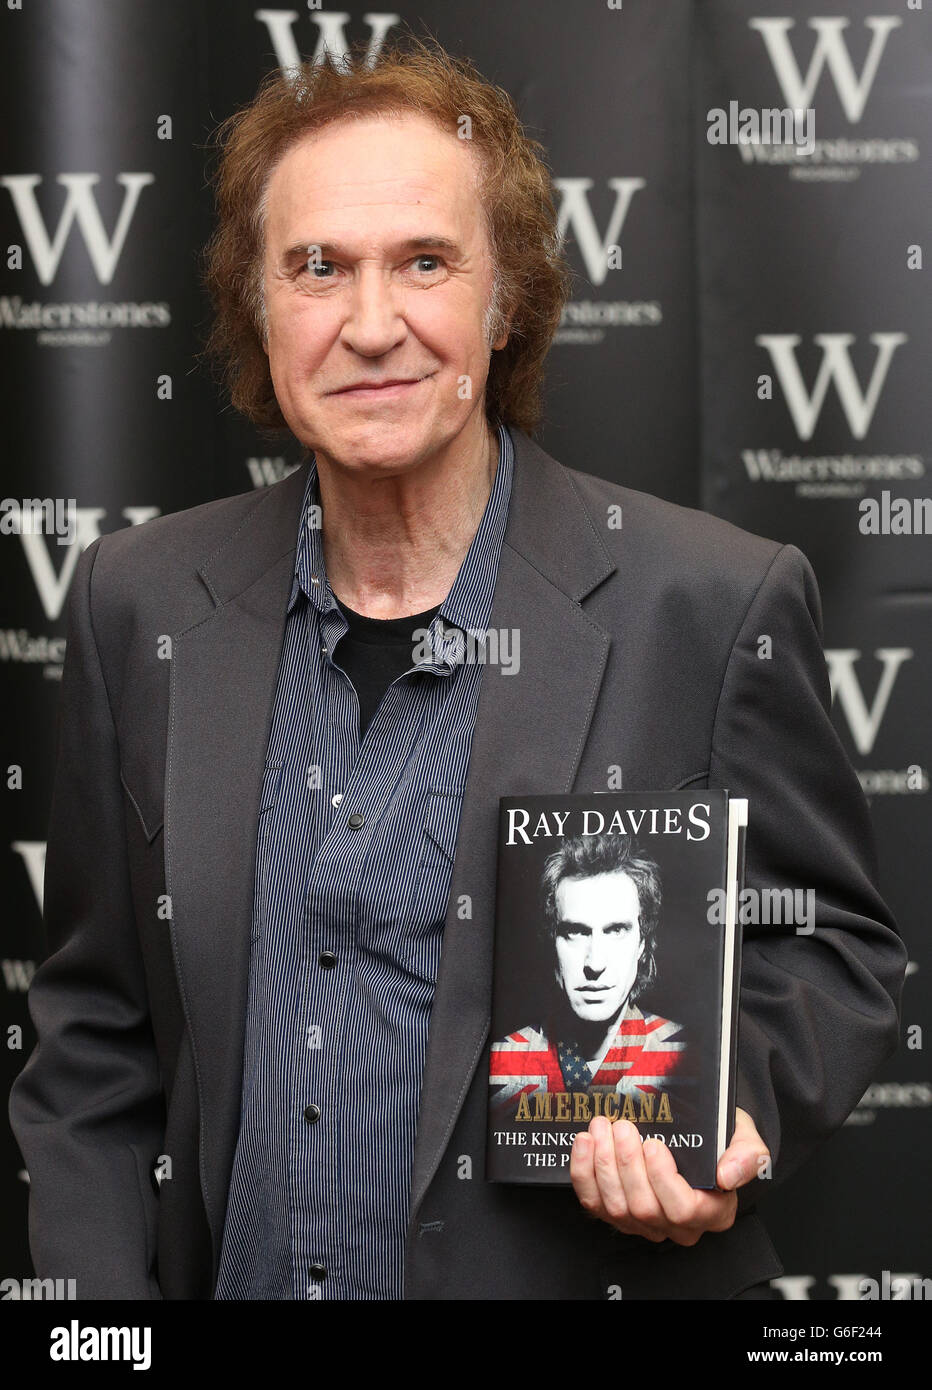 Ray Davis book launch Foto stock - Alamy